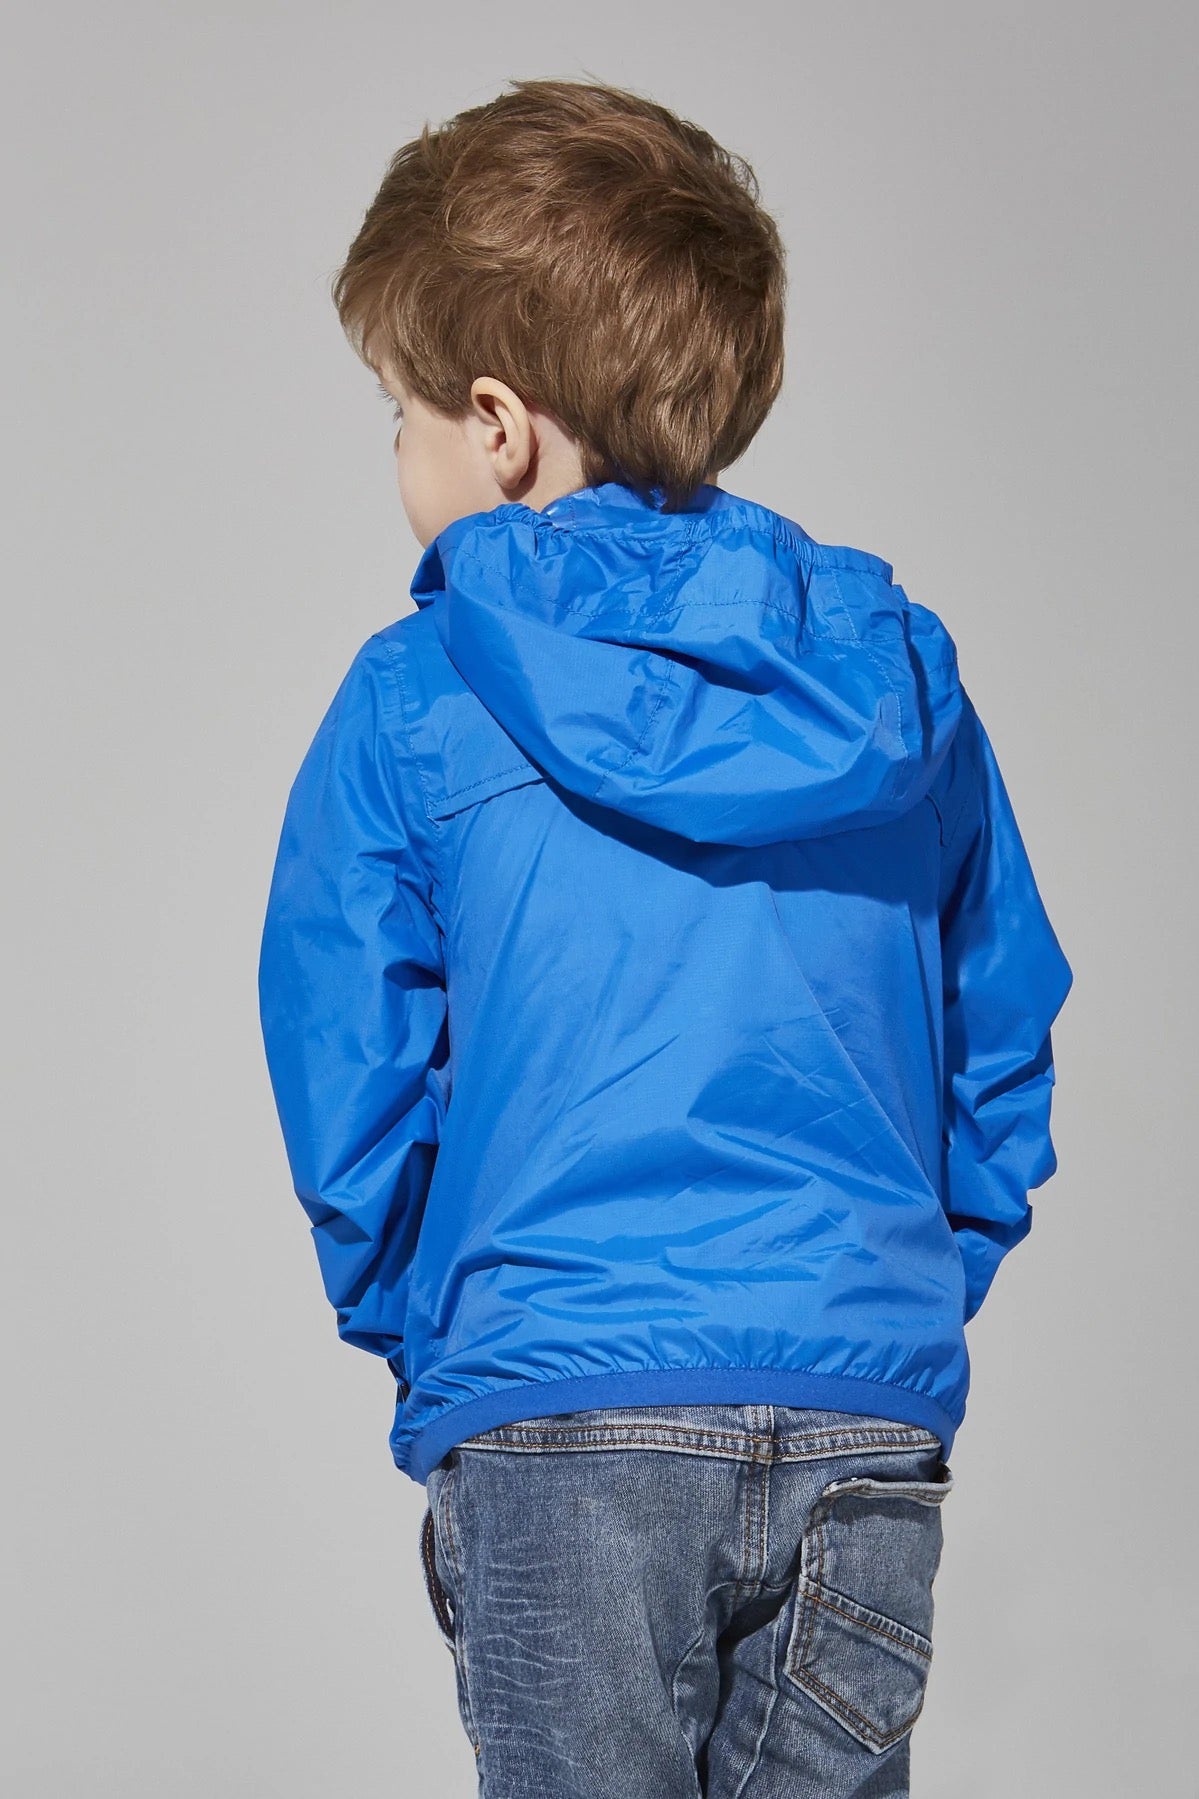 Kids royal blue full zip packable rain jacket and windbreaker - O8Lifestyle